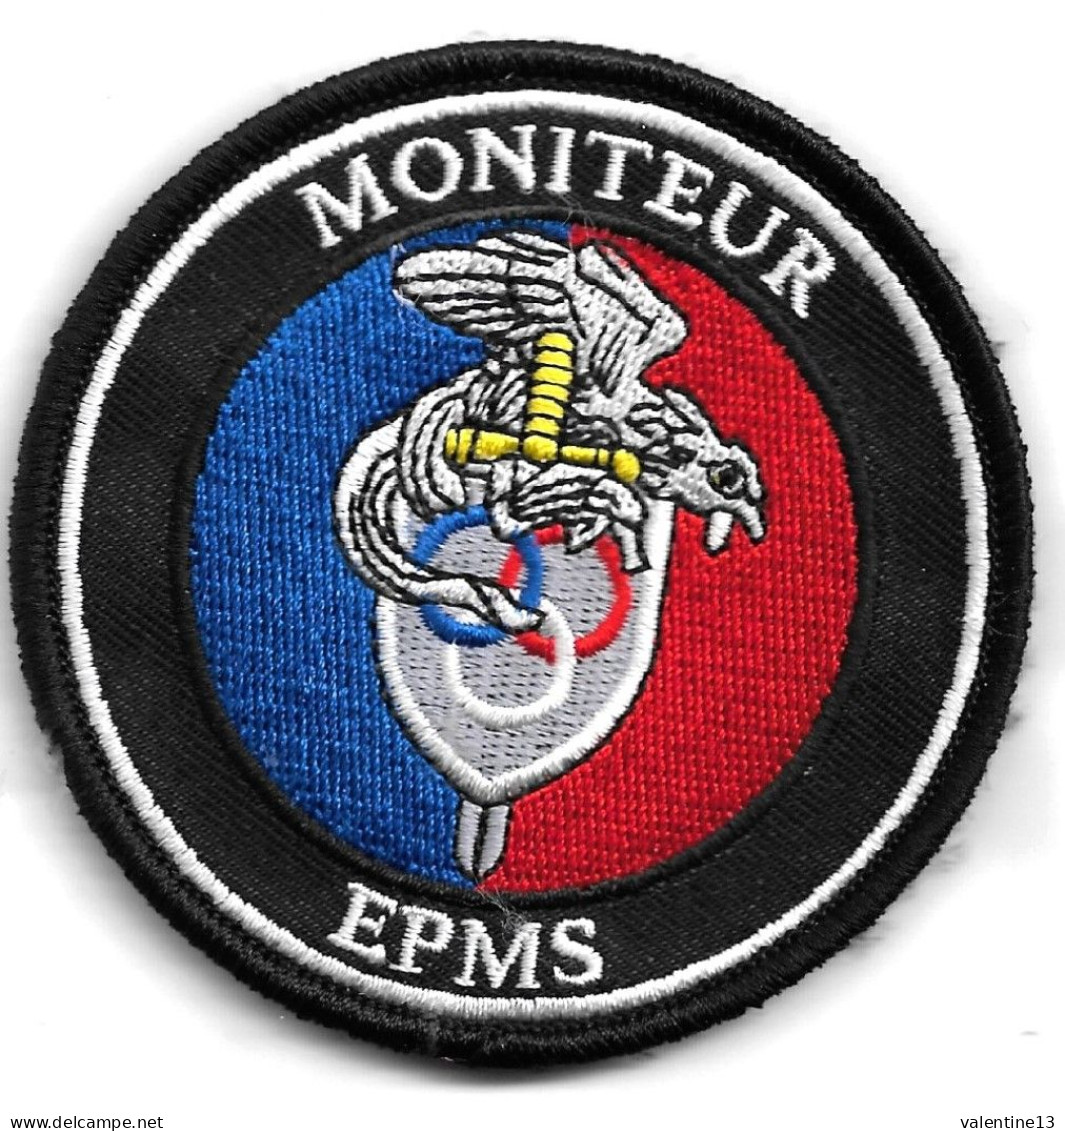 Ecusson GENDARMERIE NATIONALE MONITEUR EPMS - Police & Gendarmerie